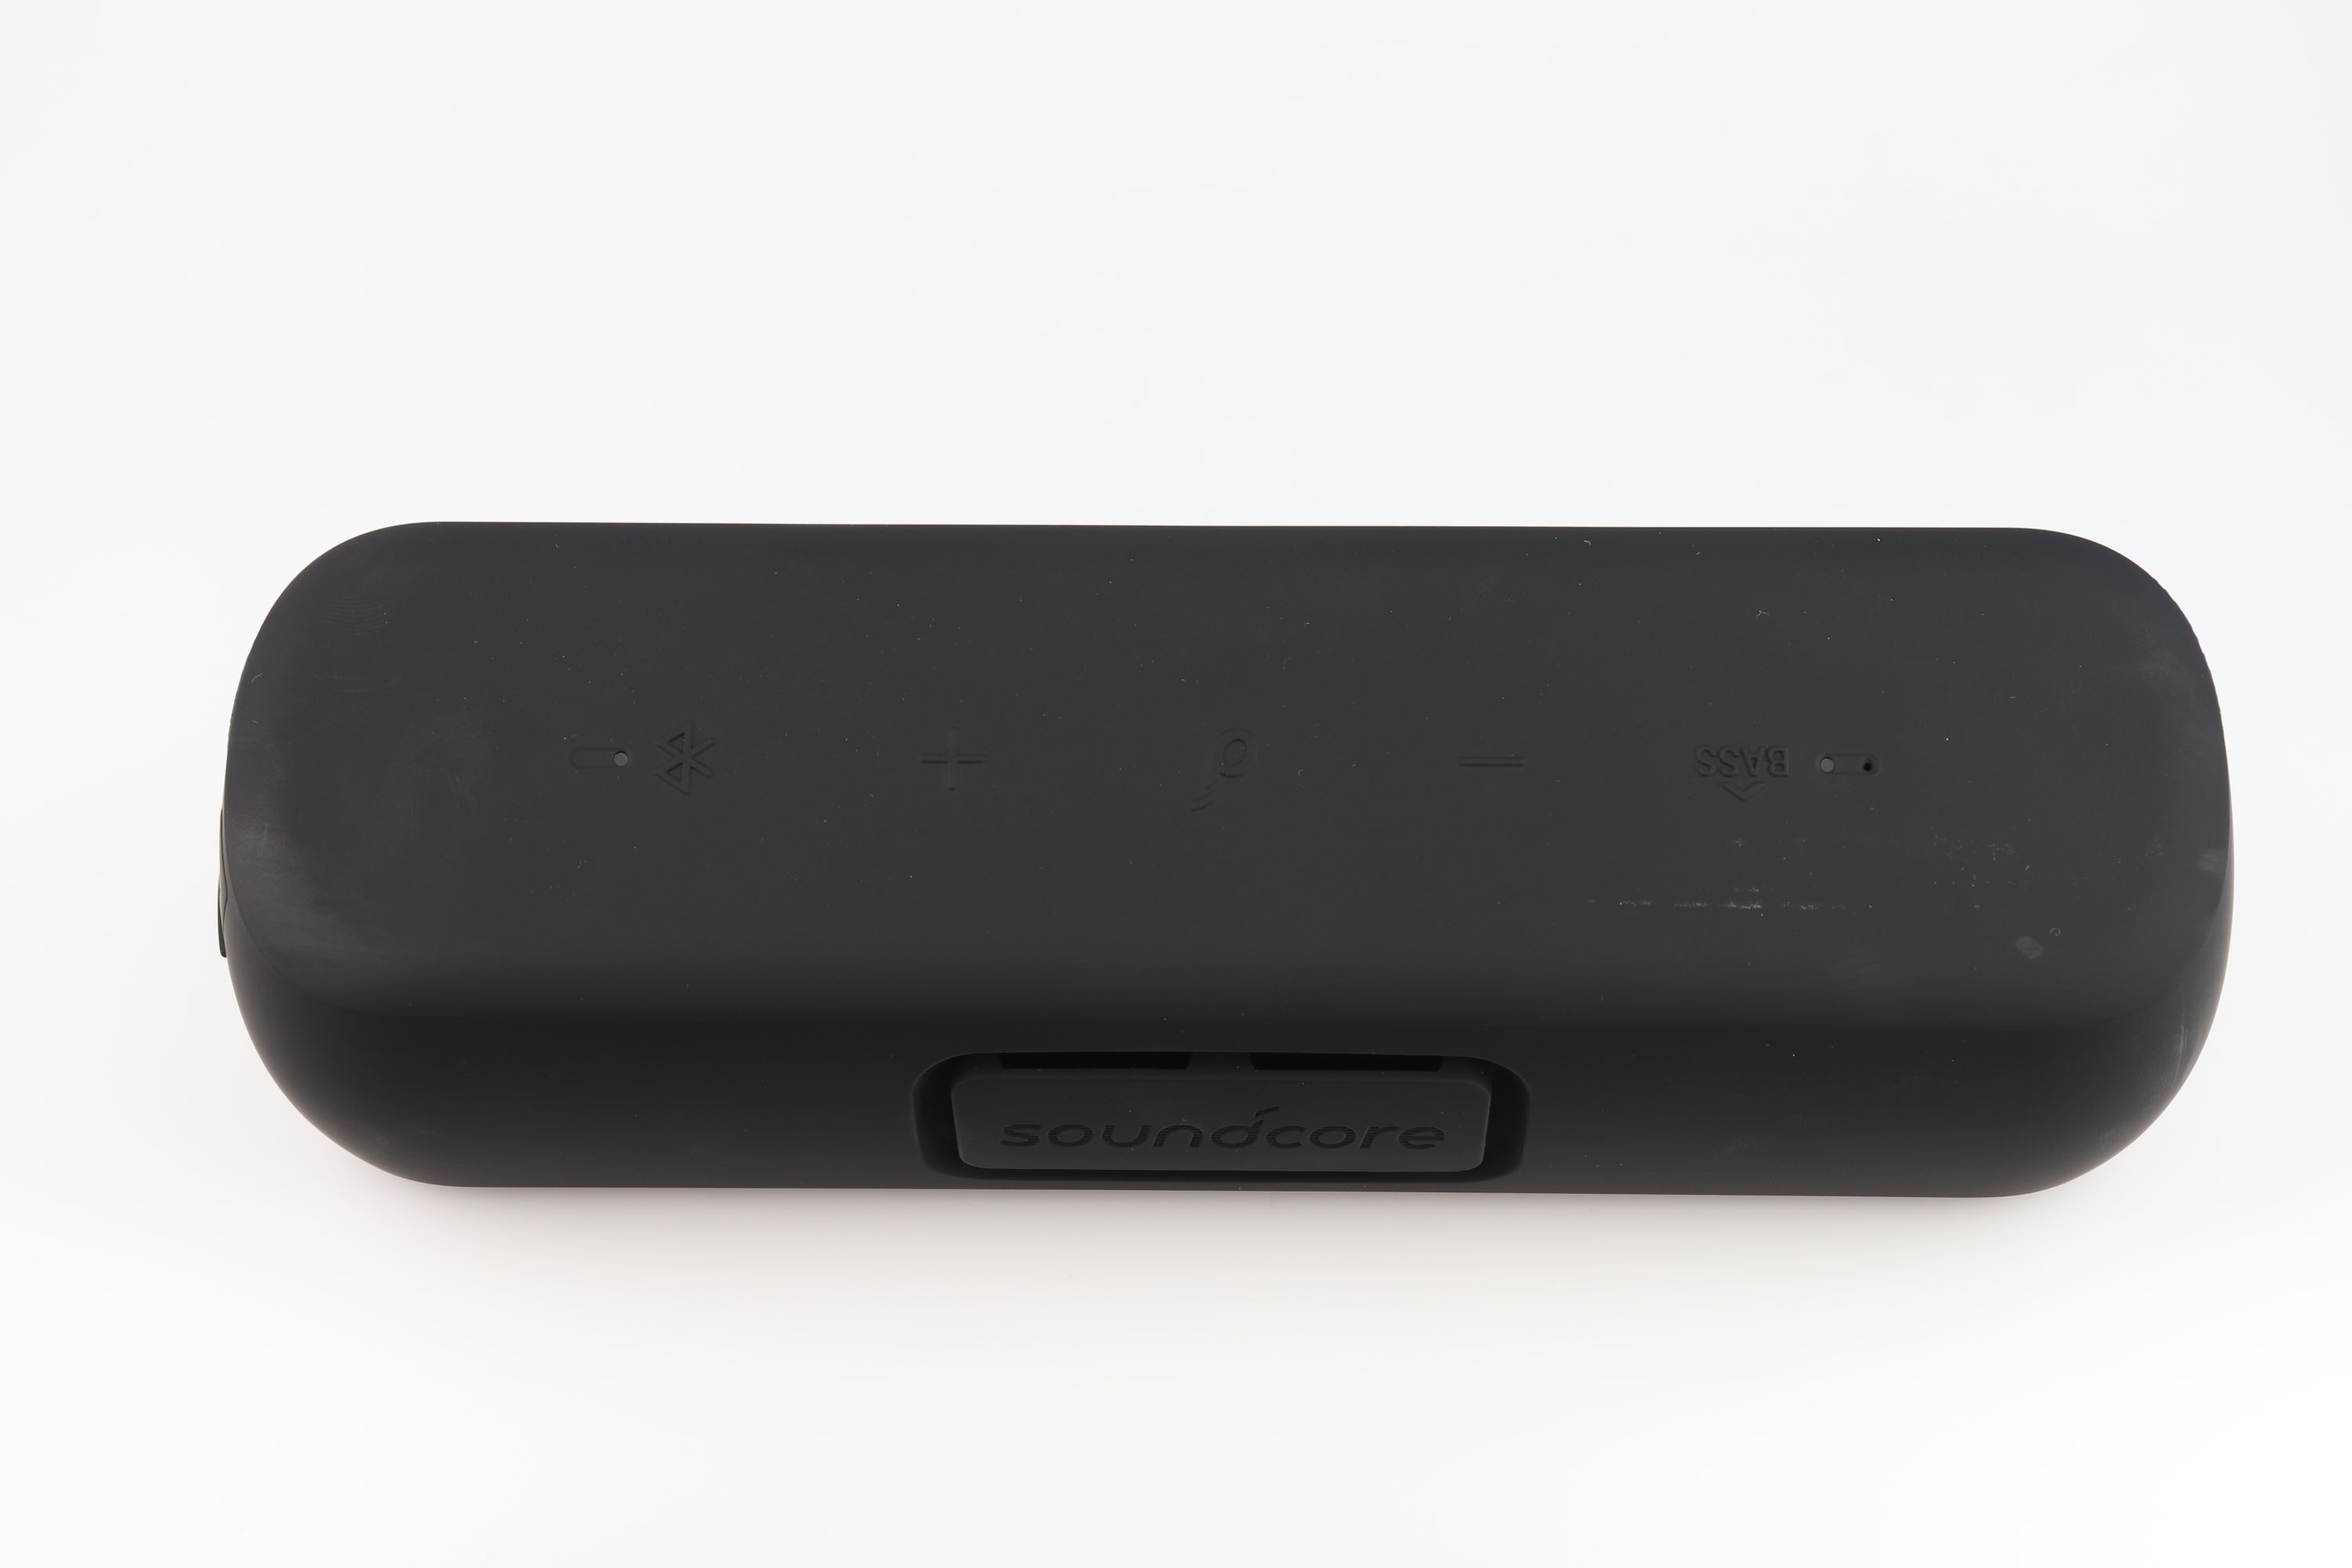 Ersatz USB Ladekabel Für JBL Charge2 Tragbar Sprayproof